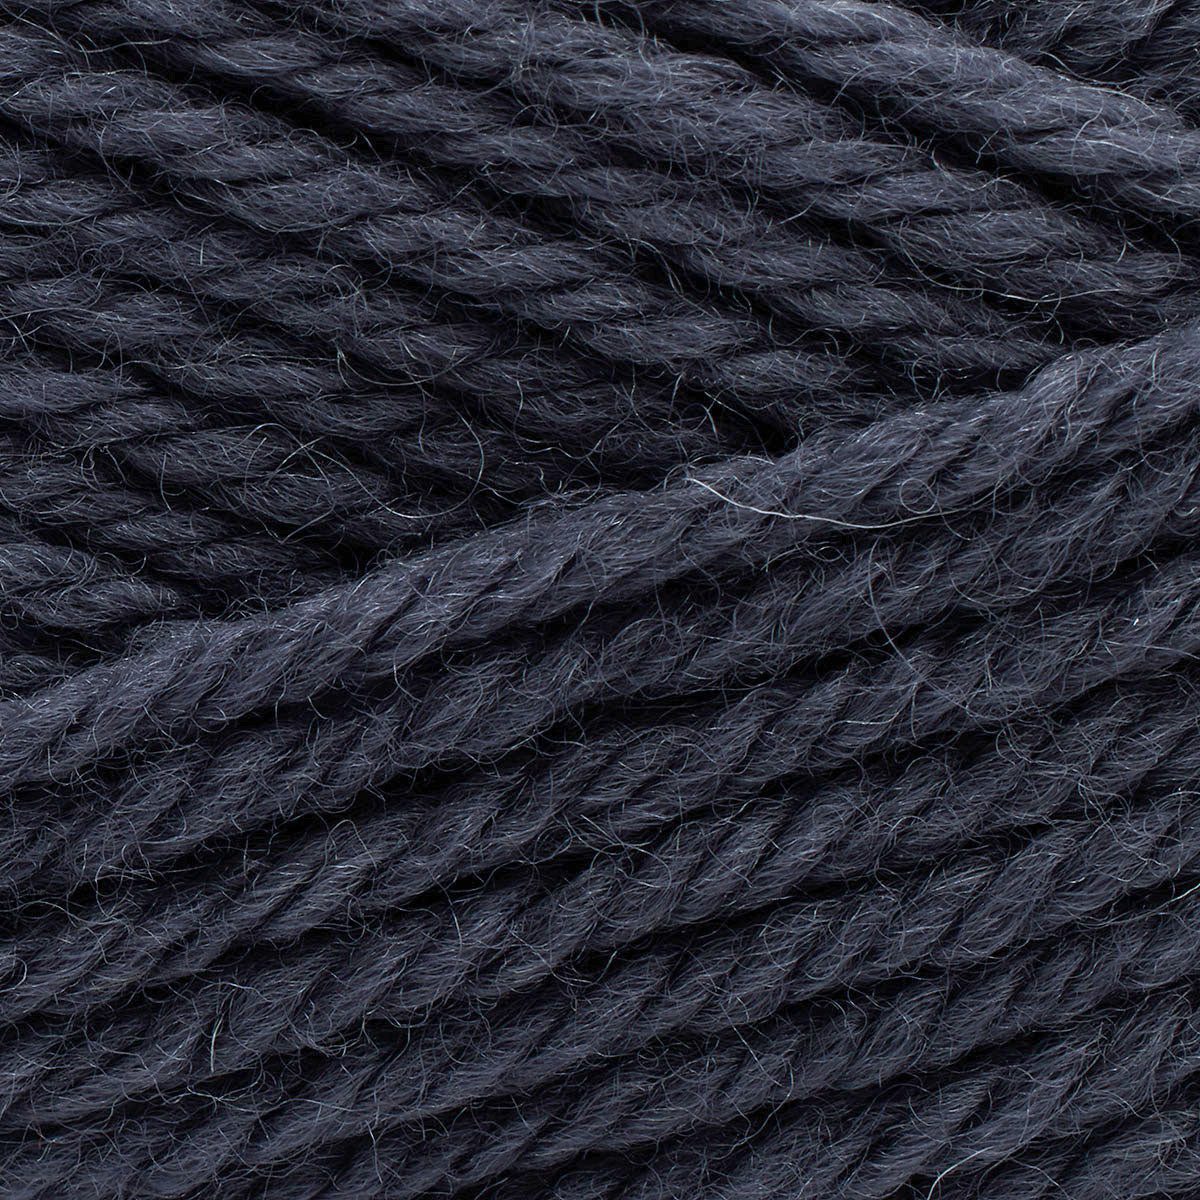 Peruvian Highland Wool anthracite [219]